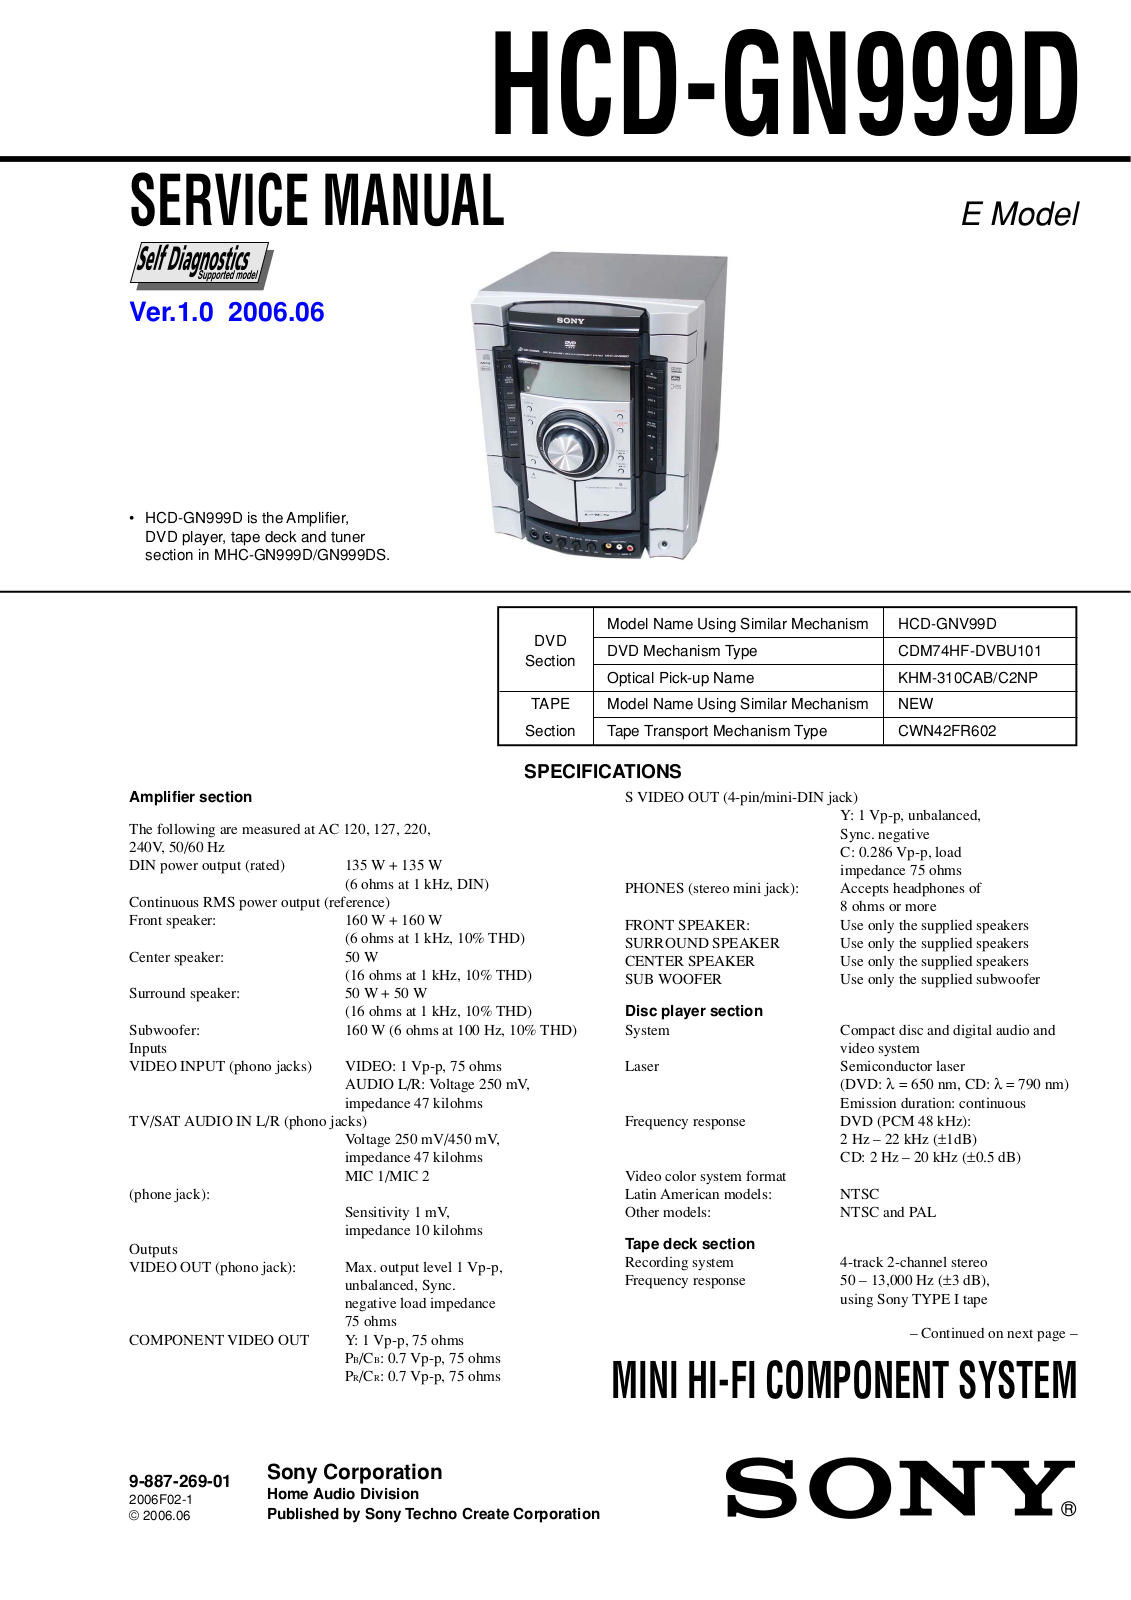 Sony HCD-GN999D Service manual